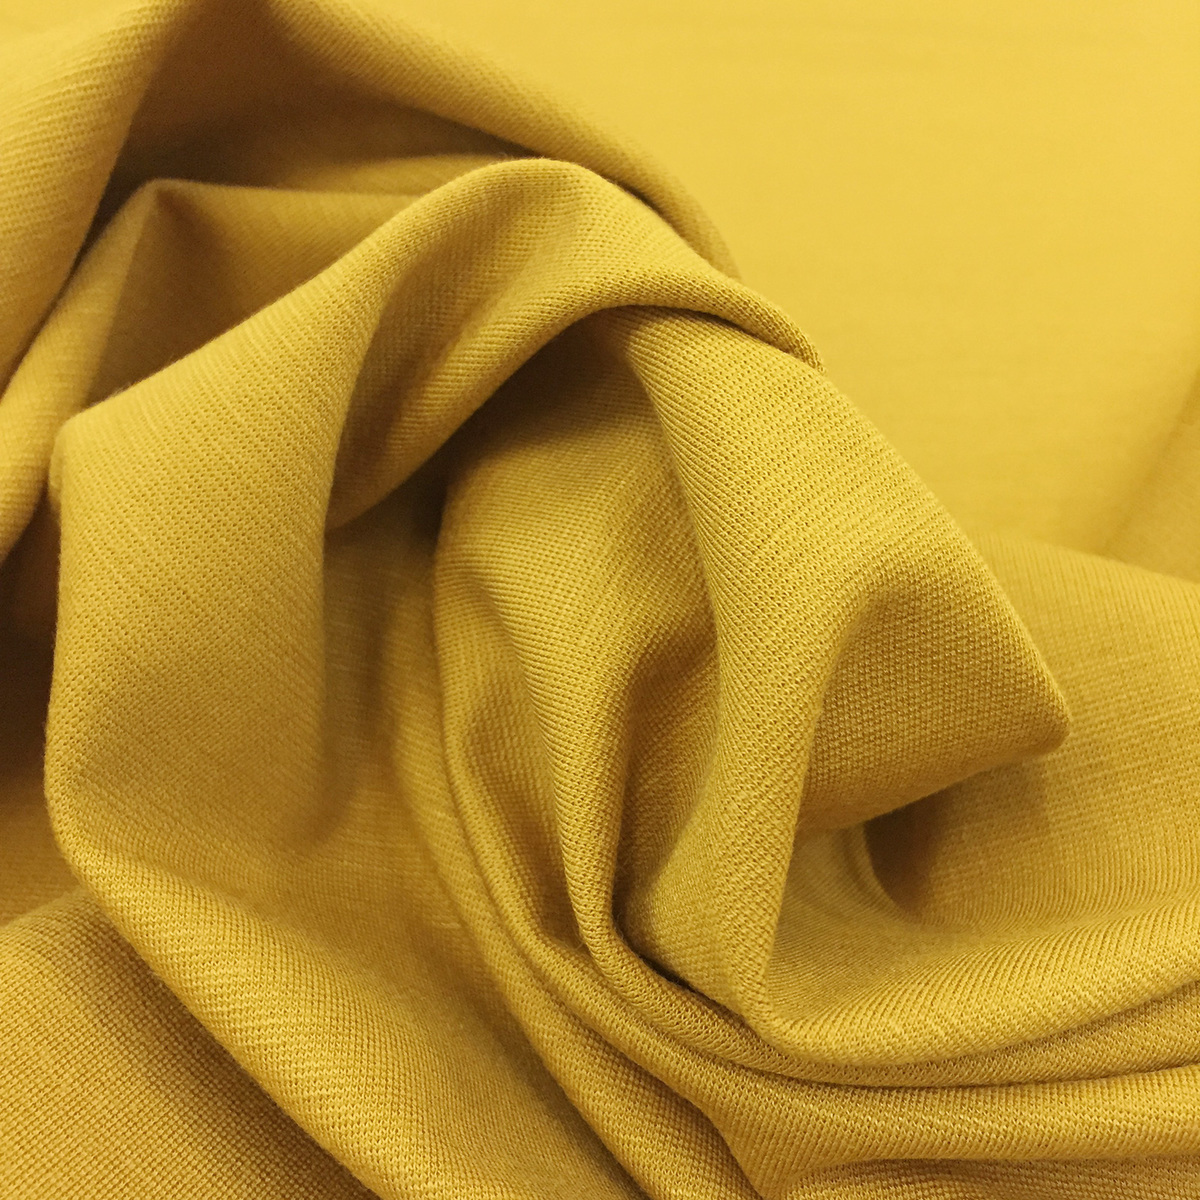 Желтые х б. Джерси желтого цвета. Припыленный желтый цвет. Пыльный желтый цвет. Джерси ткань.